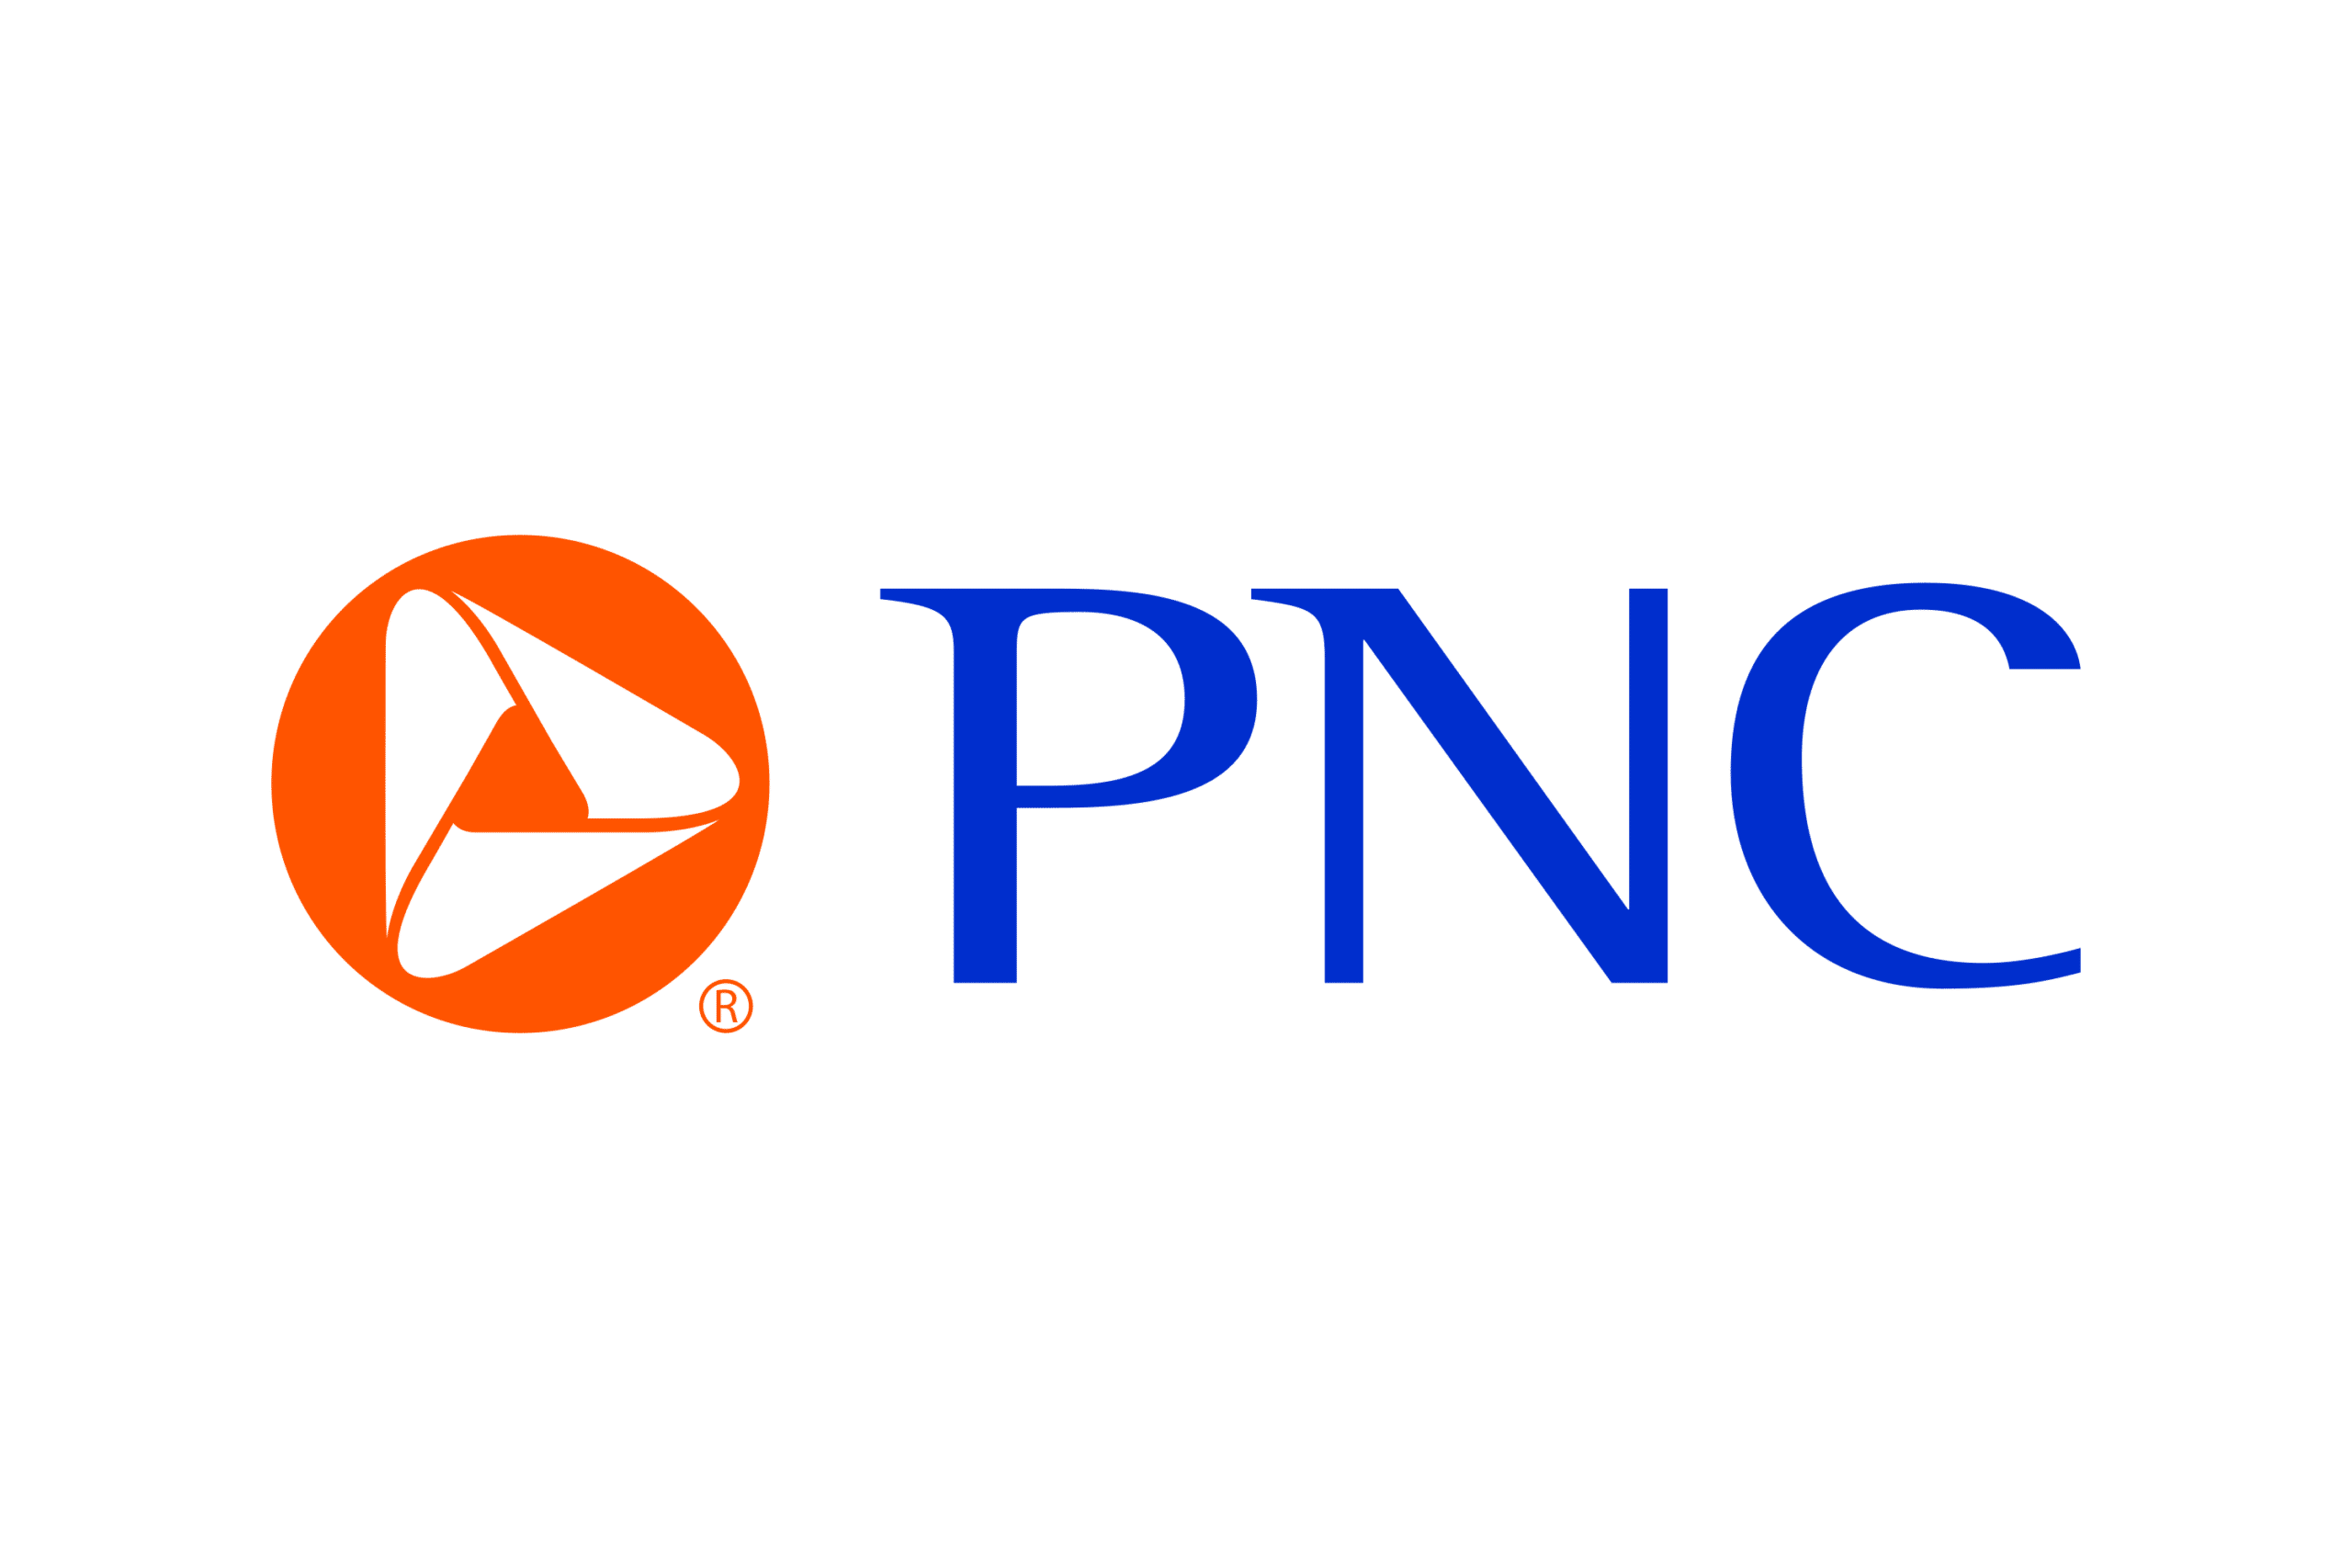 PNC Logo